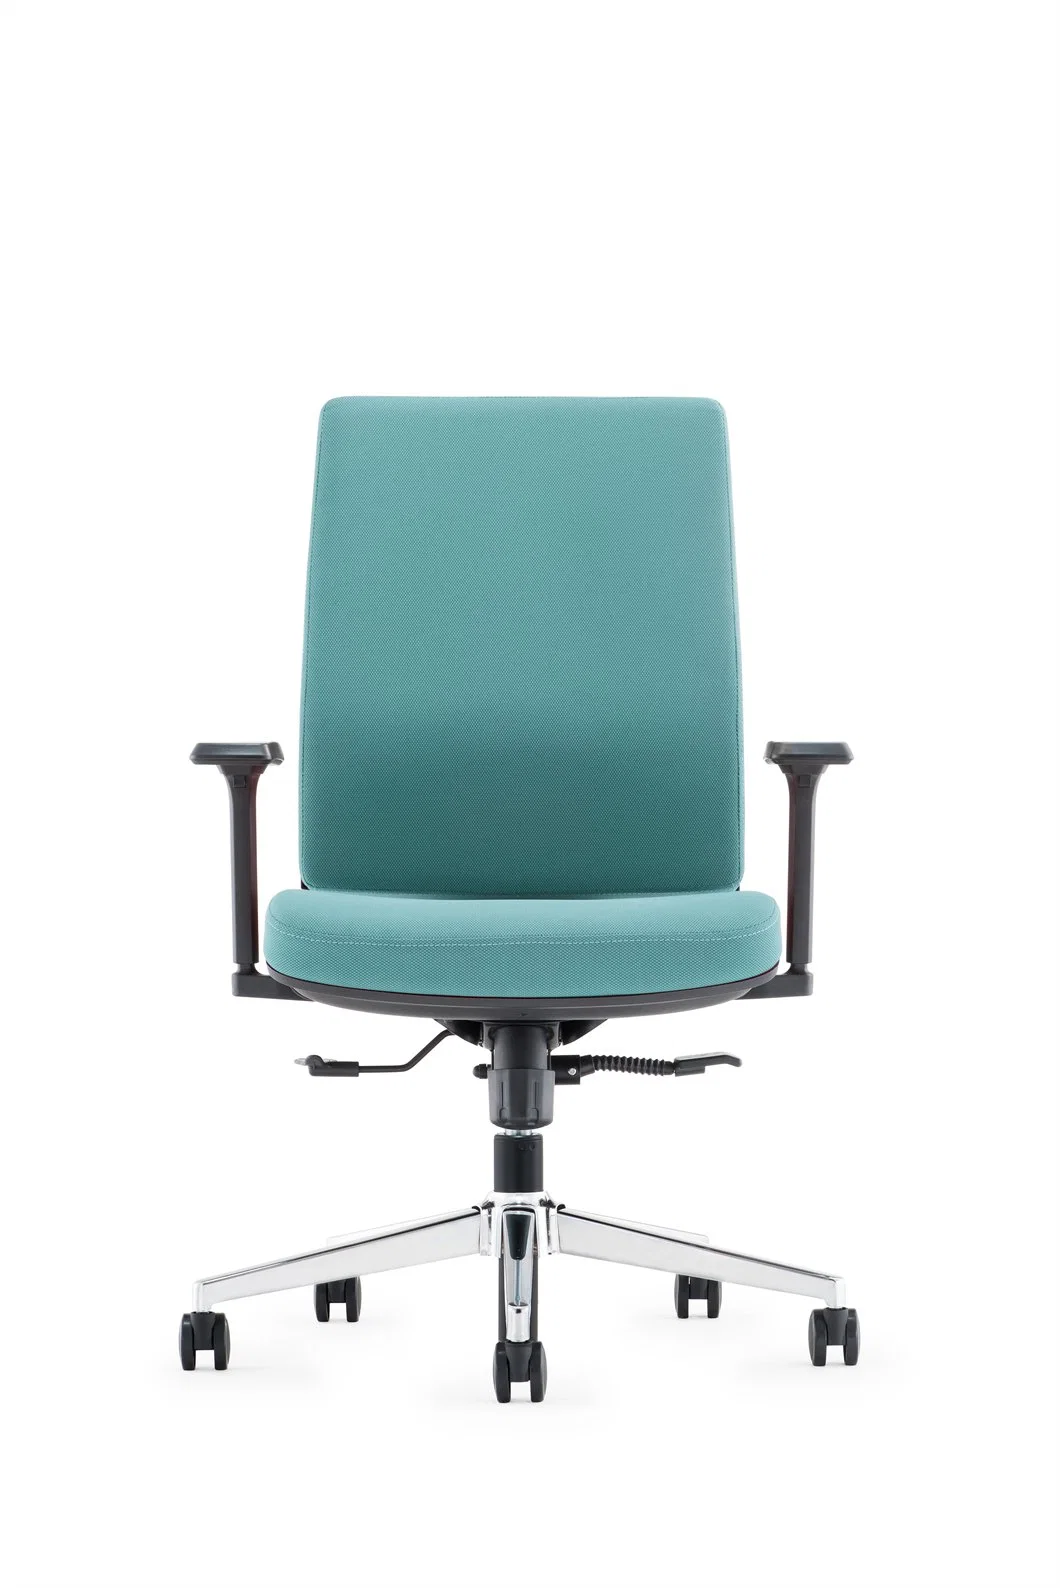 Modern Design Economic Office Chair Luxury Computer Soft Chair